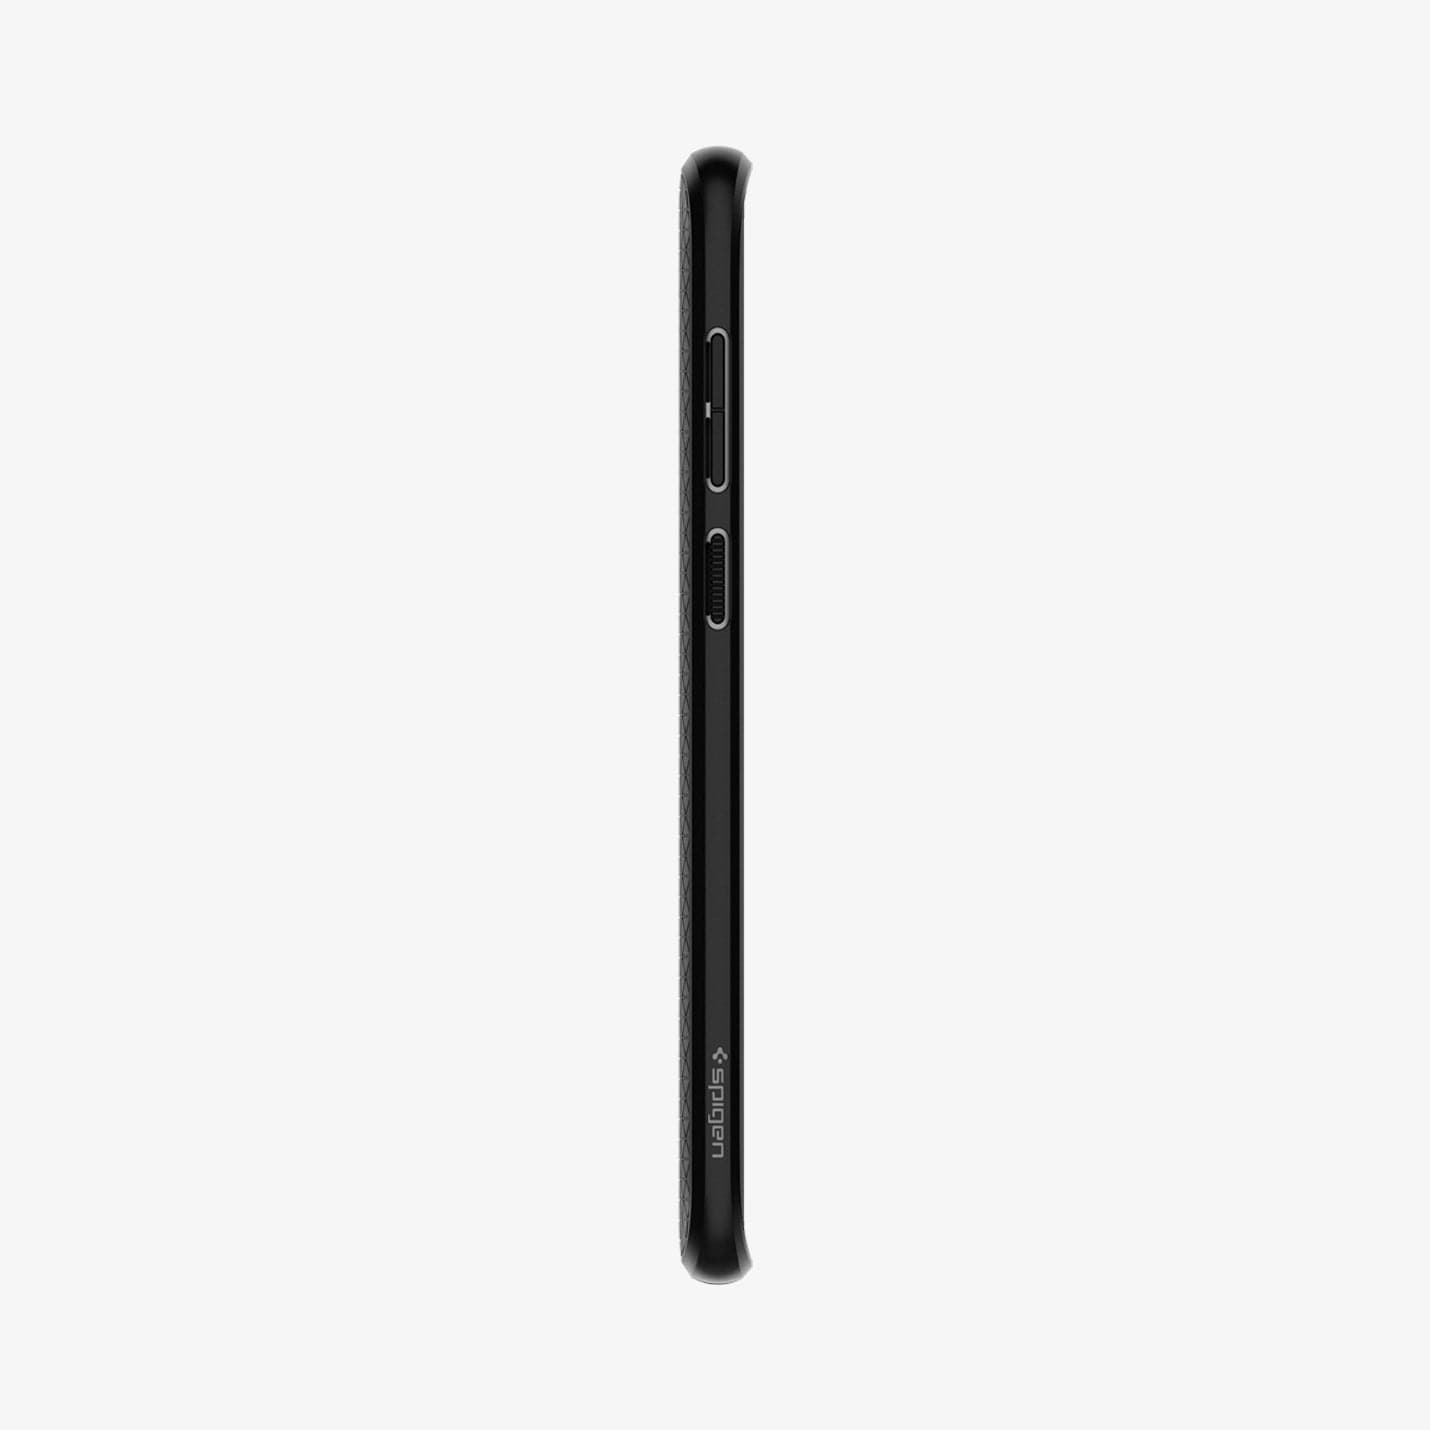 593CS22920 - Galaxy S9 Plus Liquid Air Case in matte black showing the side